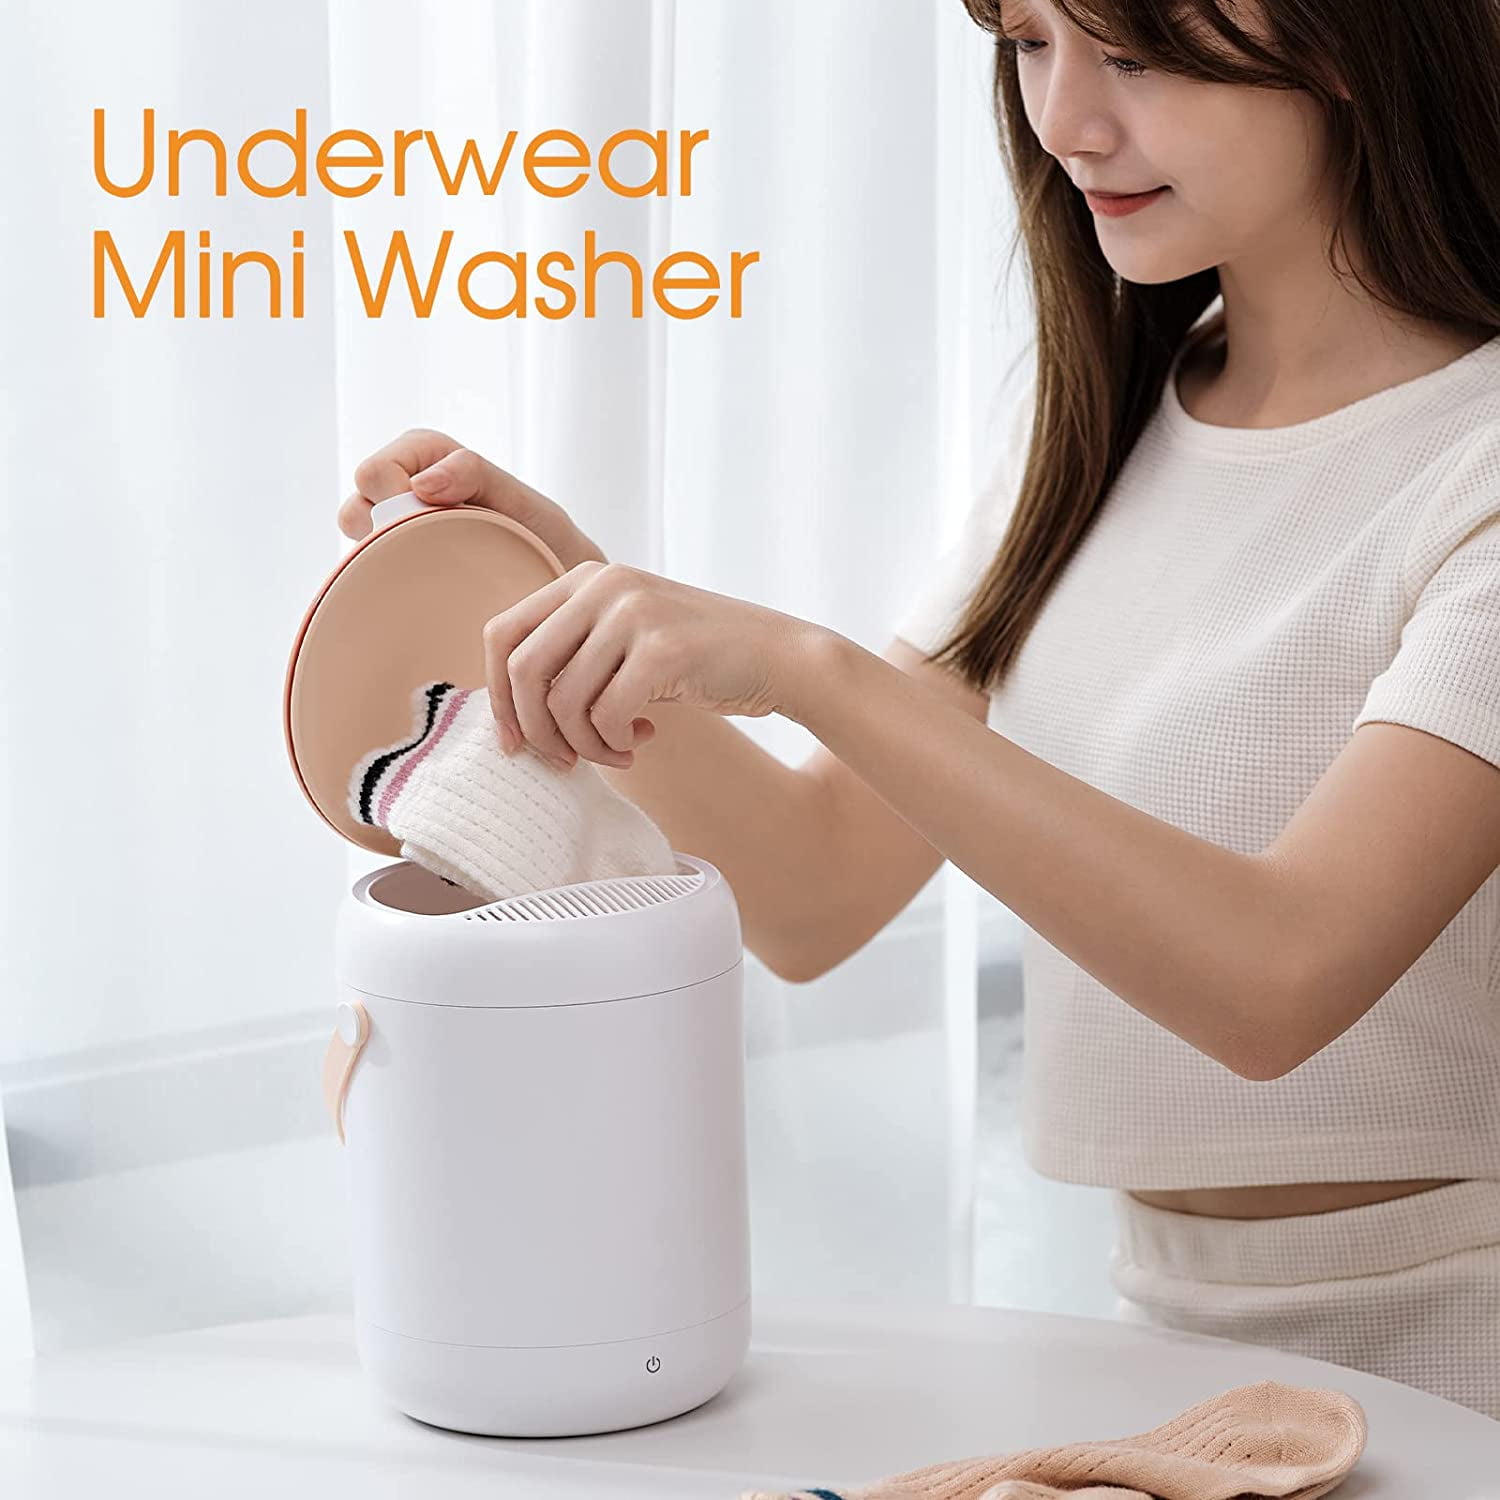 Zaqw Underwear Washer, Portable Mini Washing Machine 3L For Home 